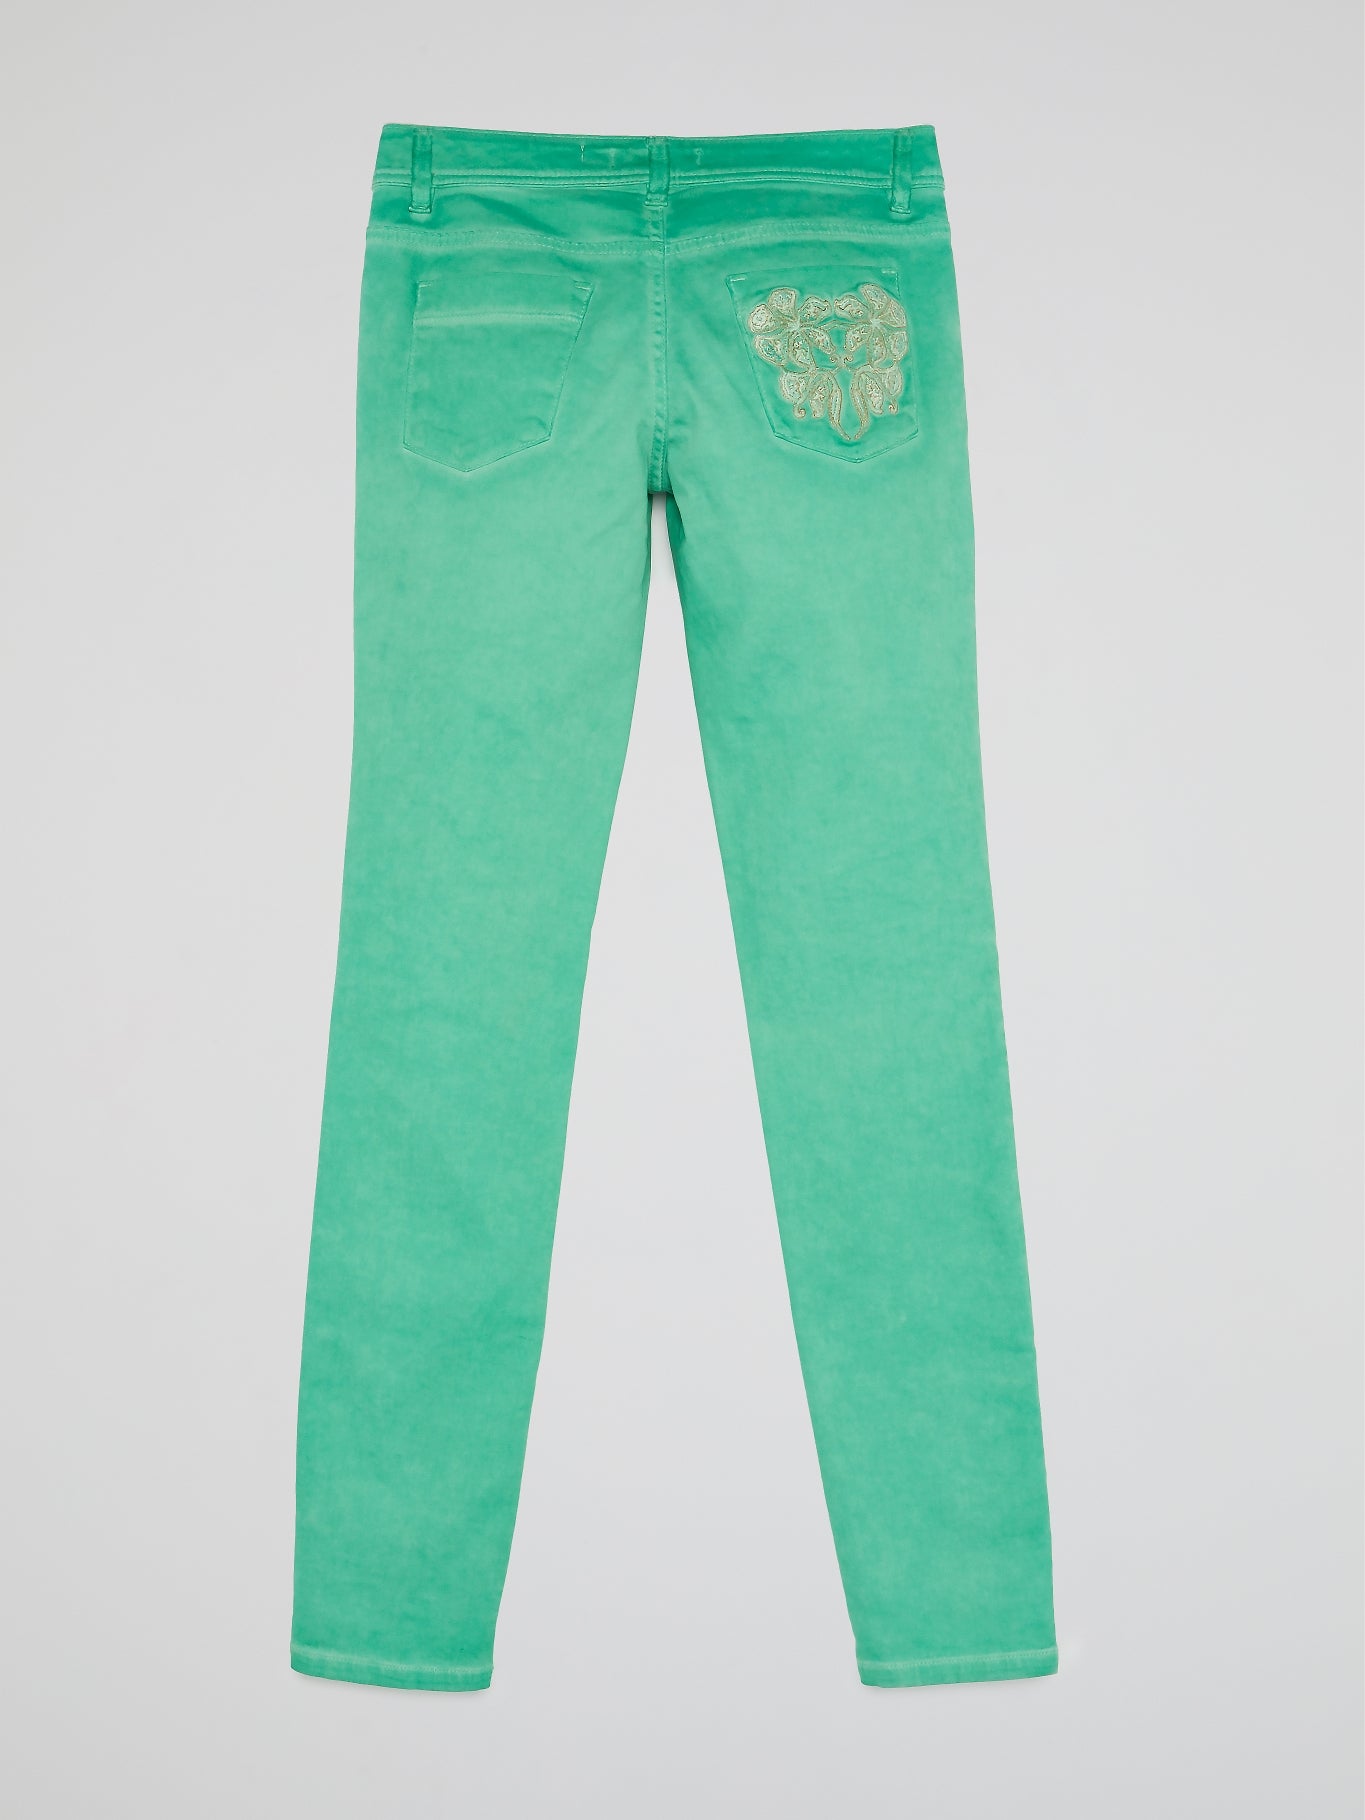 Green Slim Fit Jeans